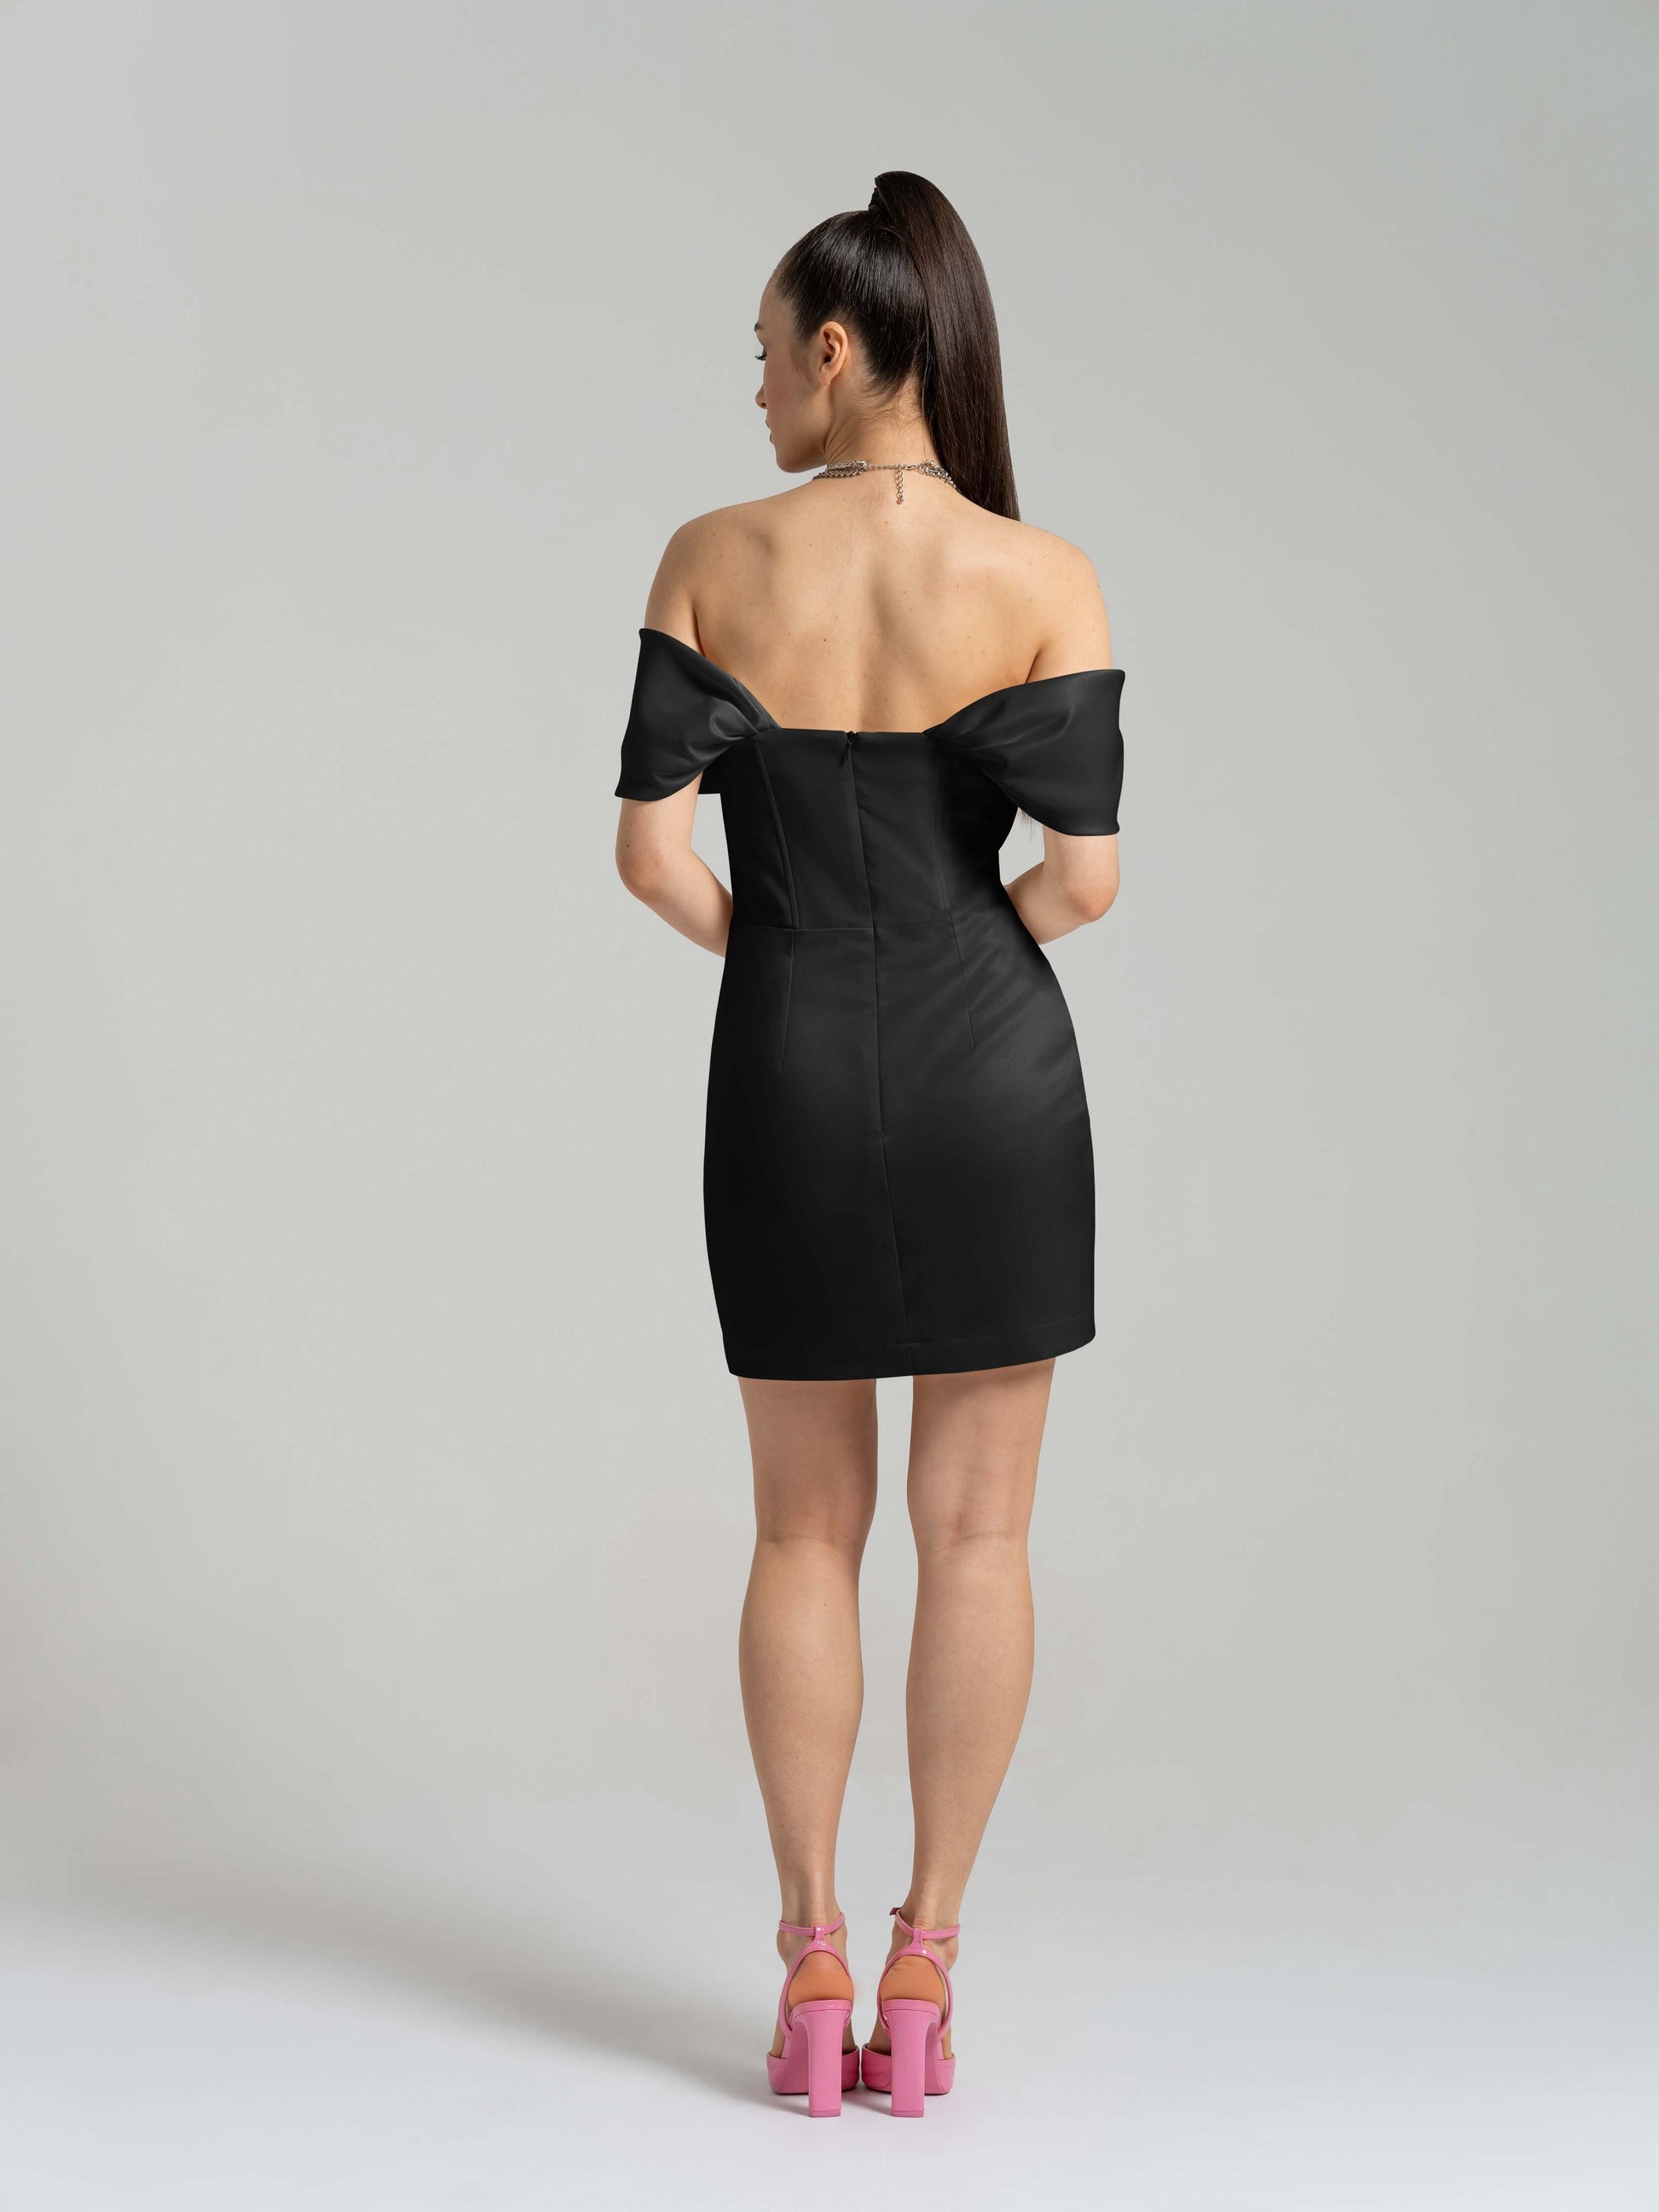 Signature of the Sun Mini Dress - Black by Tia Dorraine Women's Luxury Fashion Designer Clothing Brand